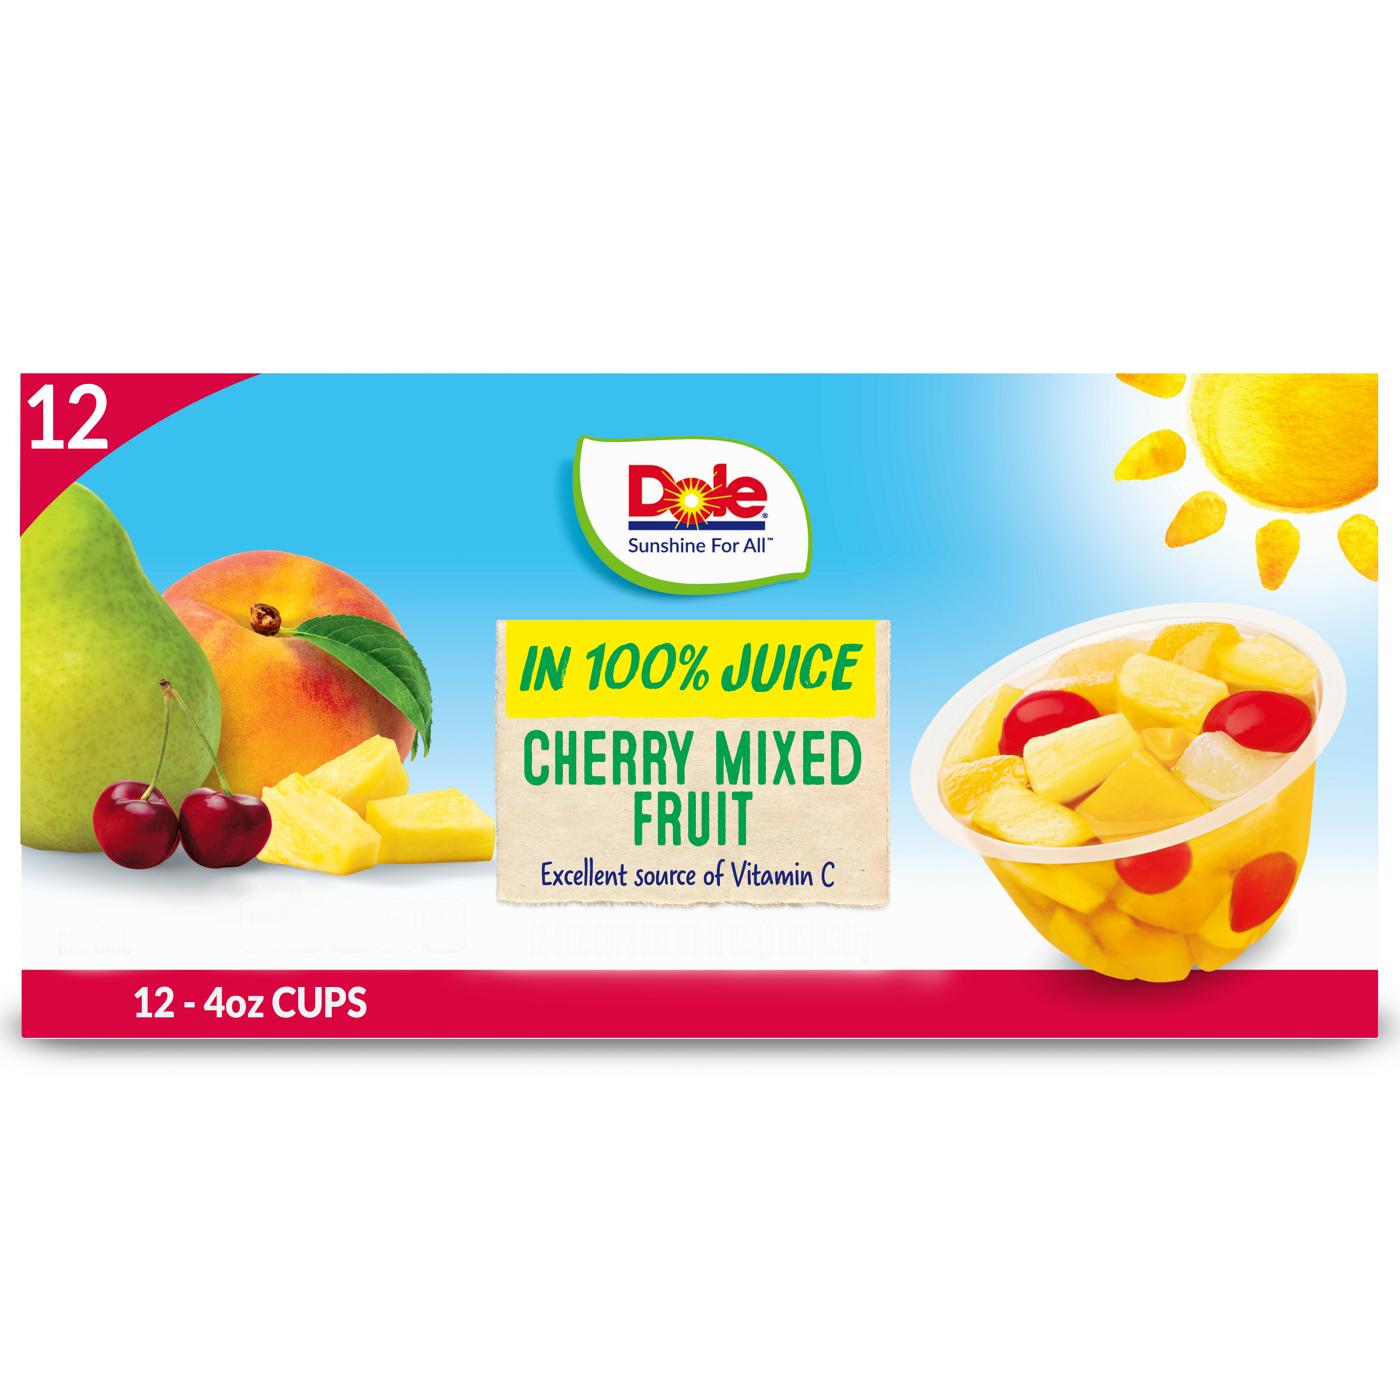 Dole Fruit Bowls - Cherry Mixed Fruit in 100% Juice; image 1 of 7